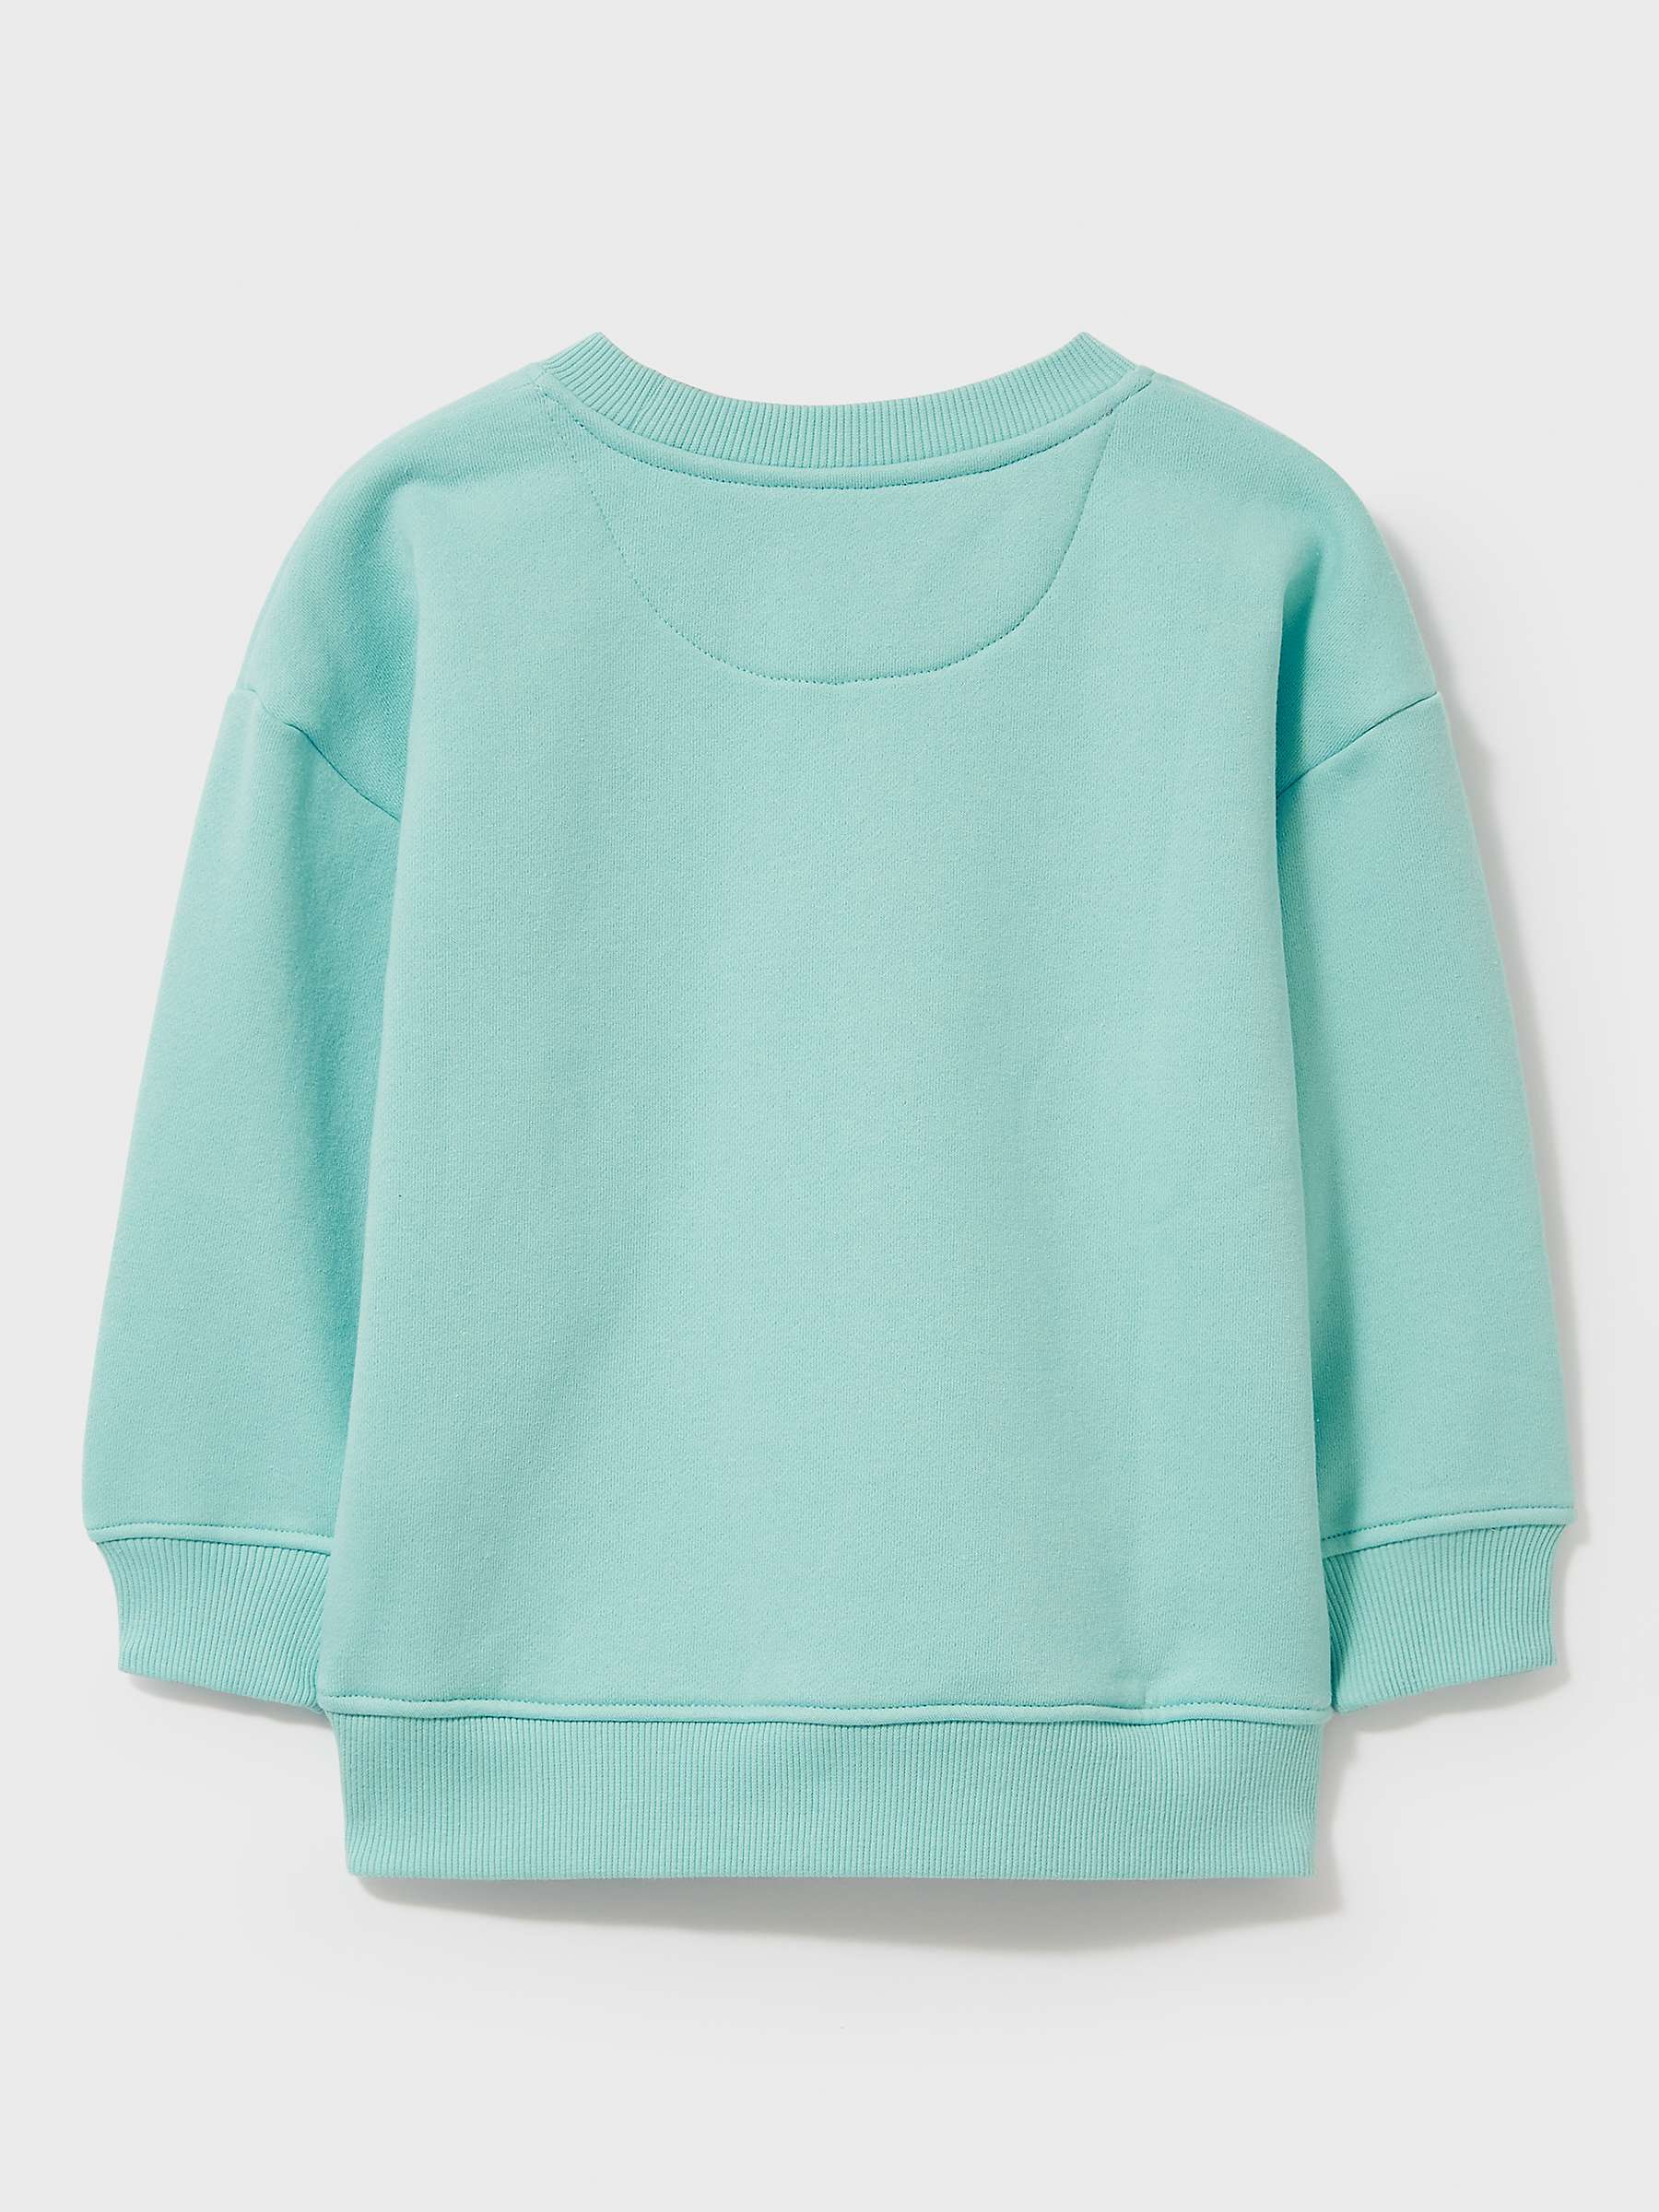 Buy Crew Clothing Kids' Glitter Print Heart Sweatshirt, Turquoise Blue Online at johnlewis.com